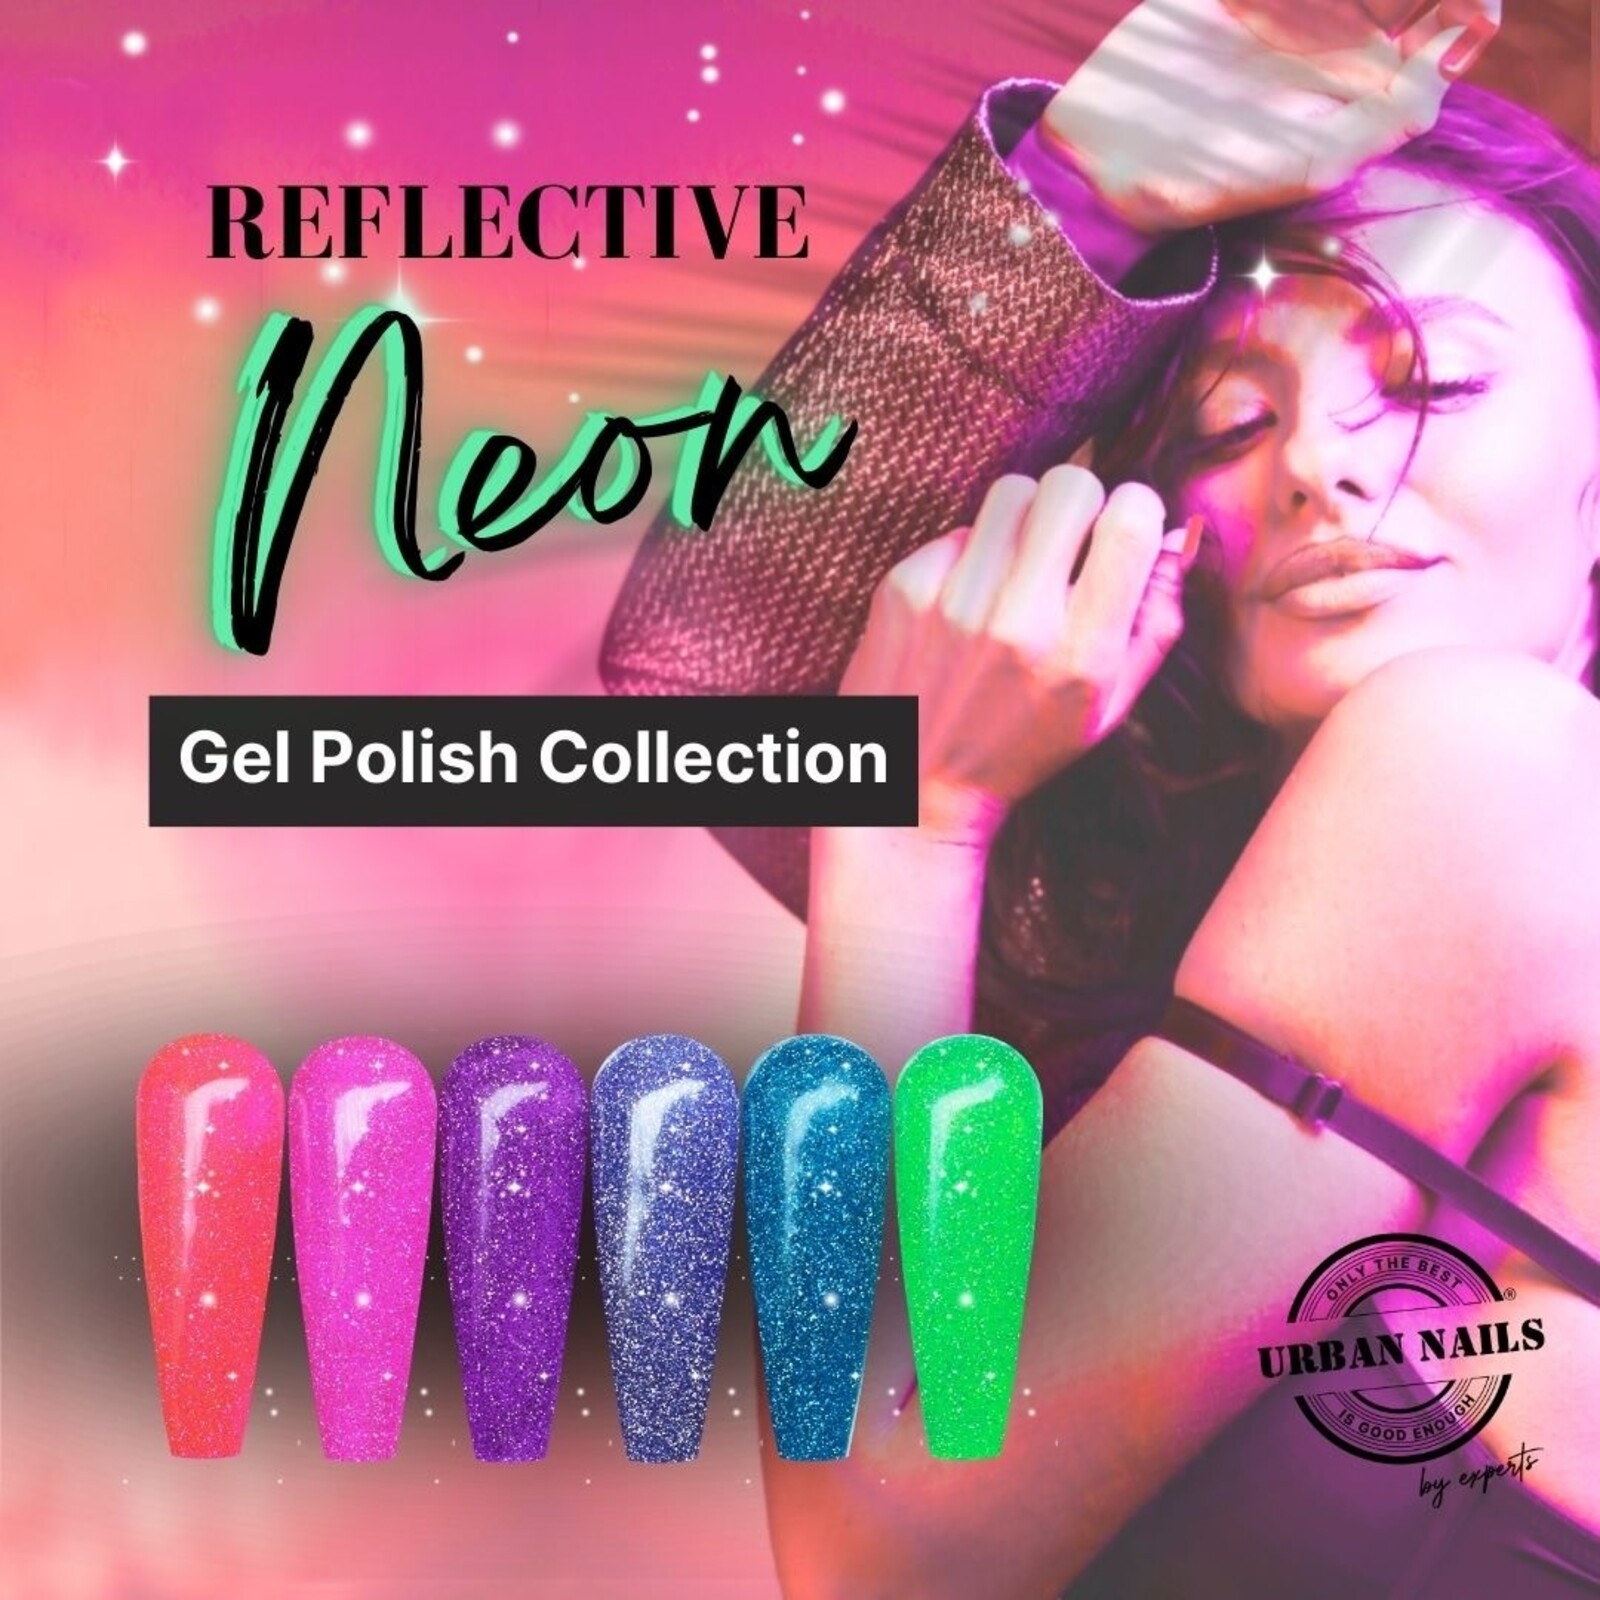 Urban nails Reflective Neon Gel Polish Collection